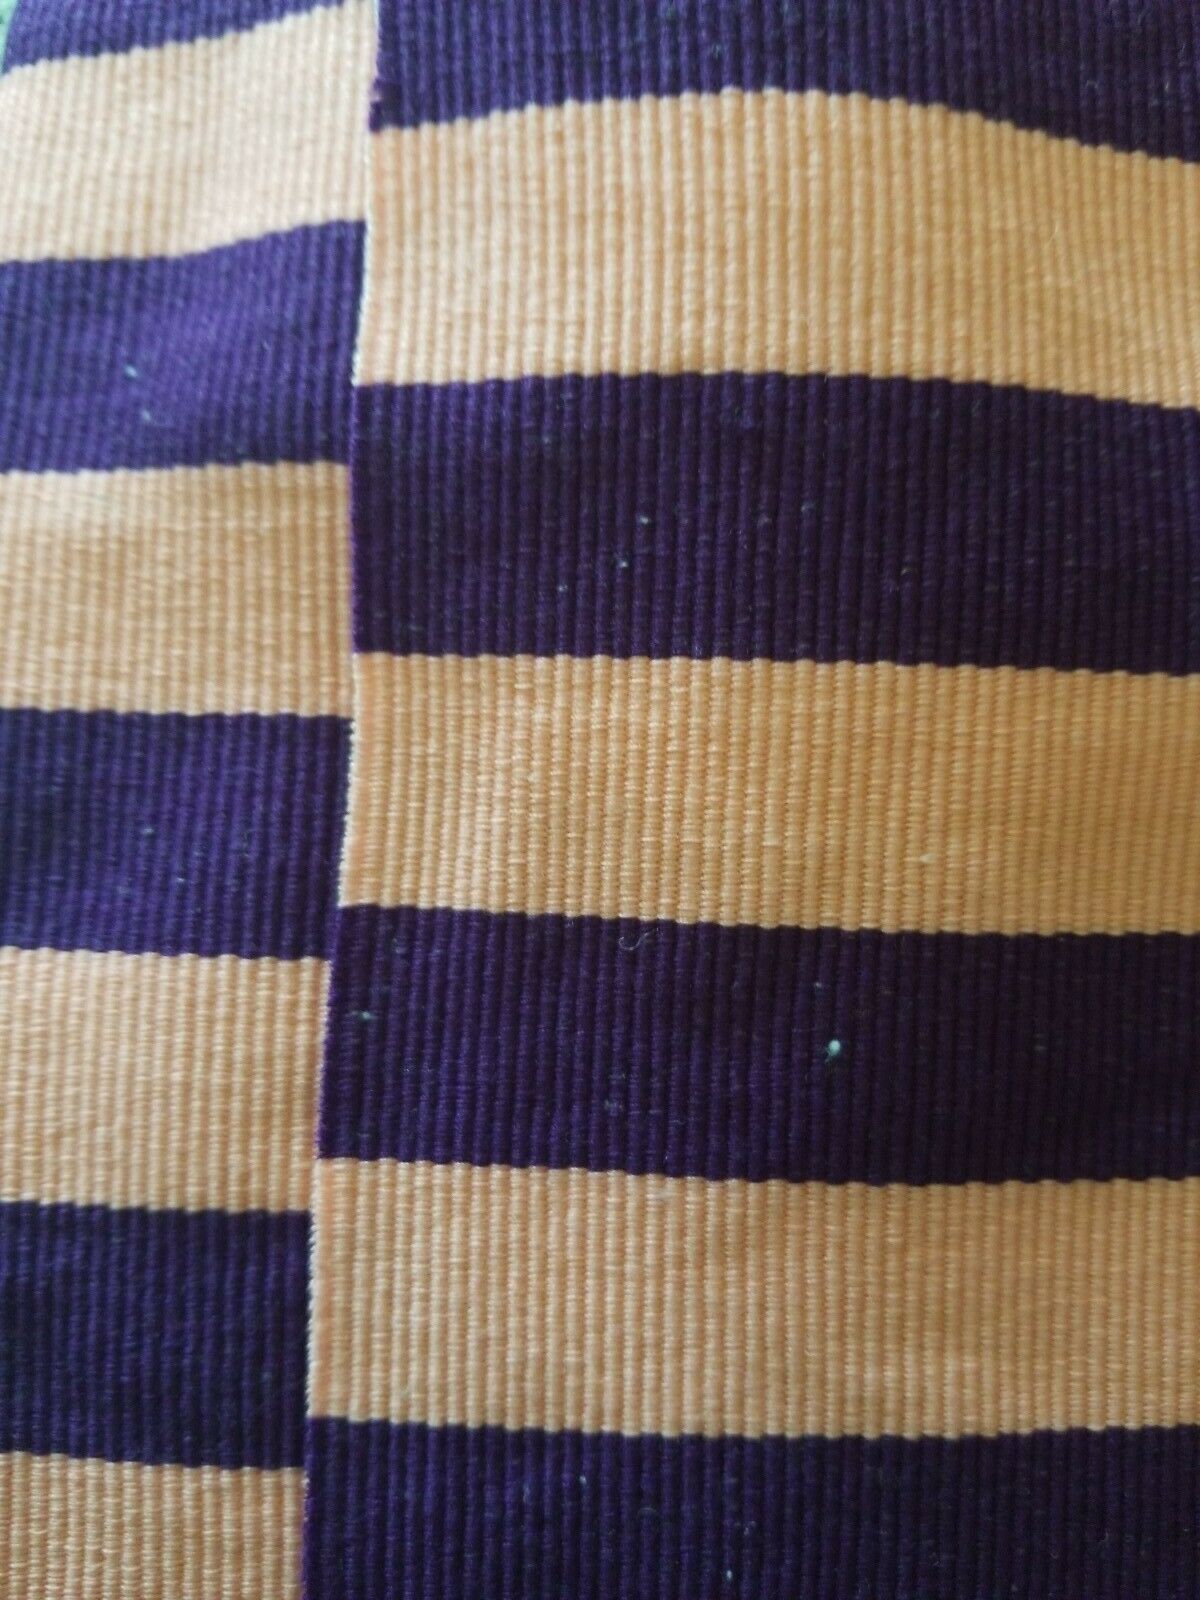 FasoDafani Fabric From Boukina Faso~peach with purple stripes 58"(1yd&22")×16"